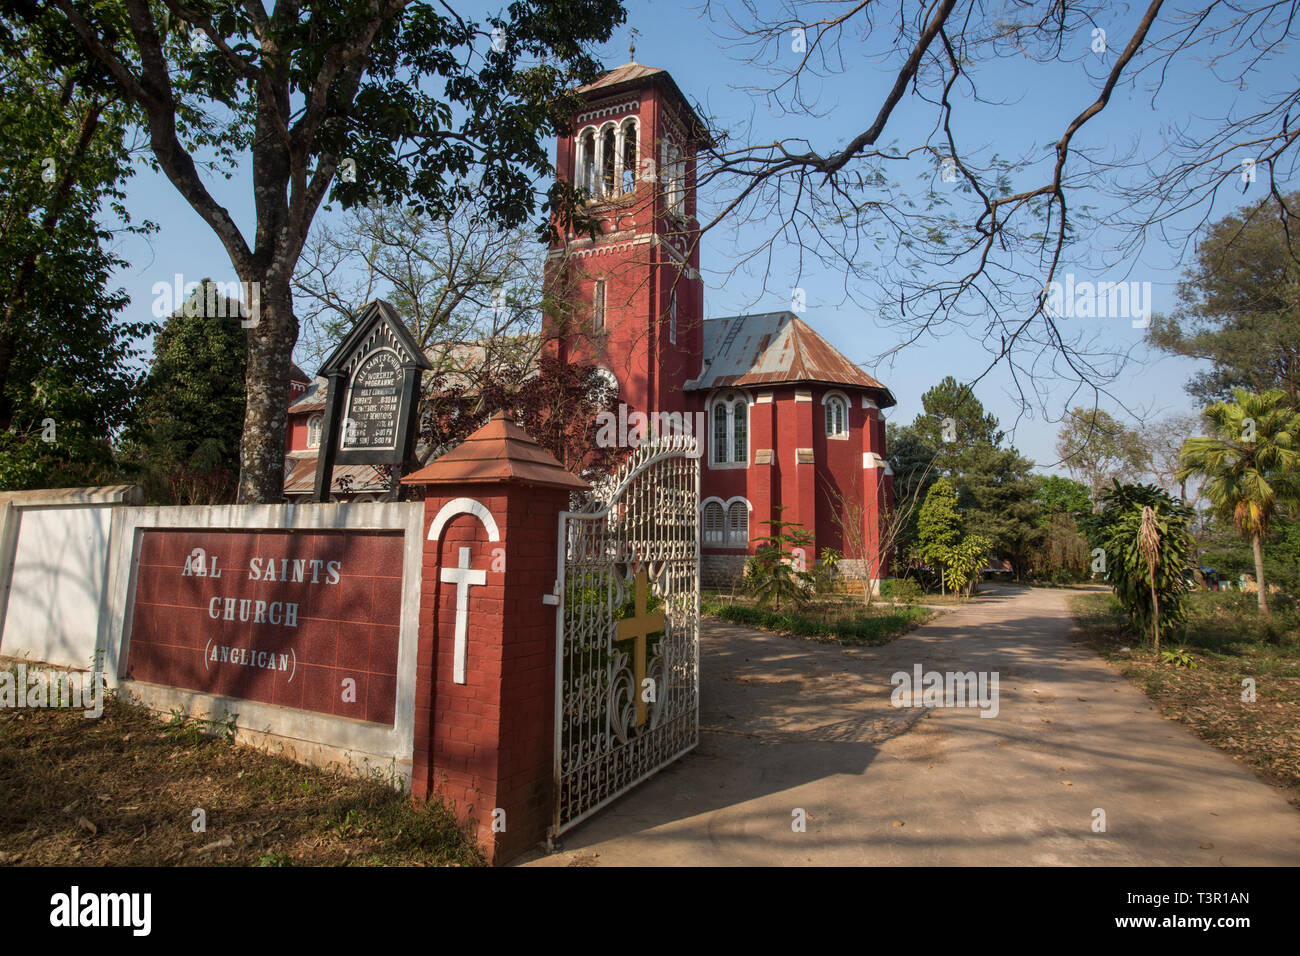 All Saints Anglican Church, Pyin-U-Lwin, Myanmar Stock Photo - Alamy